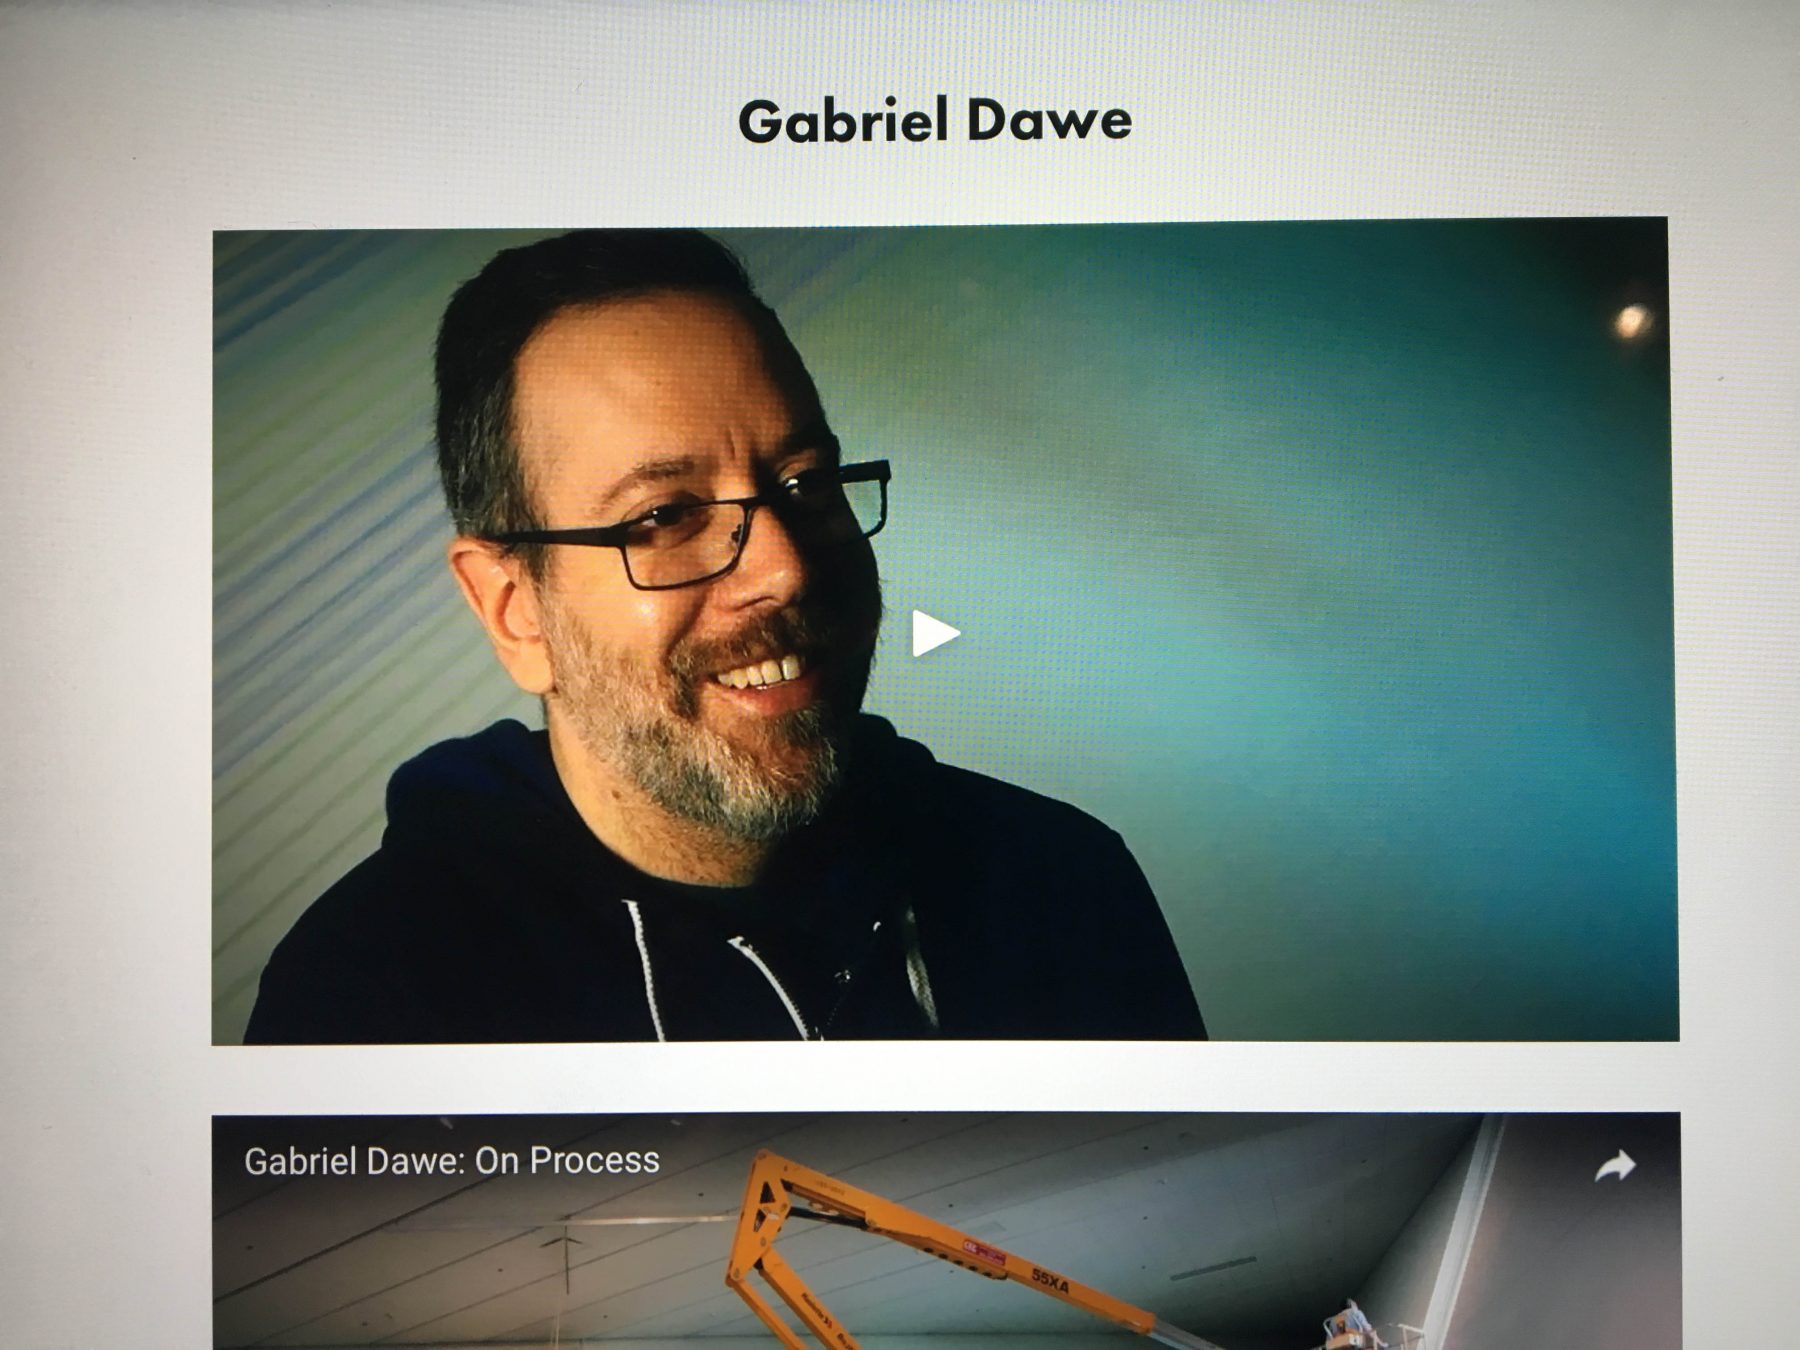 A Portrait of Gabriel Dawe as he appears on a Denver Art Museum tablet.